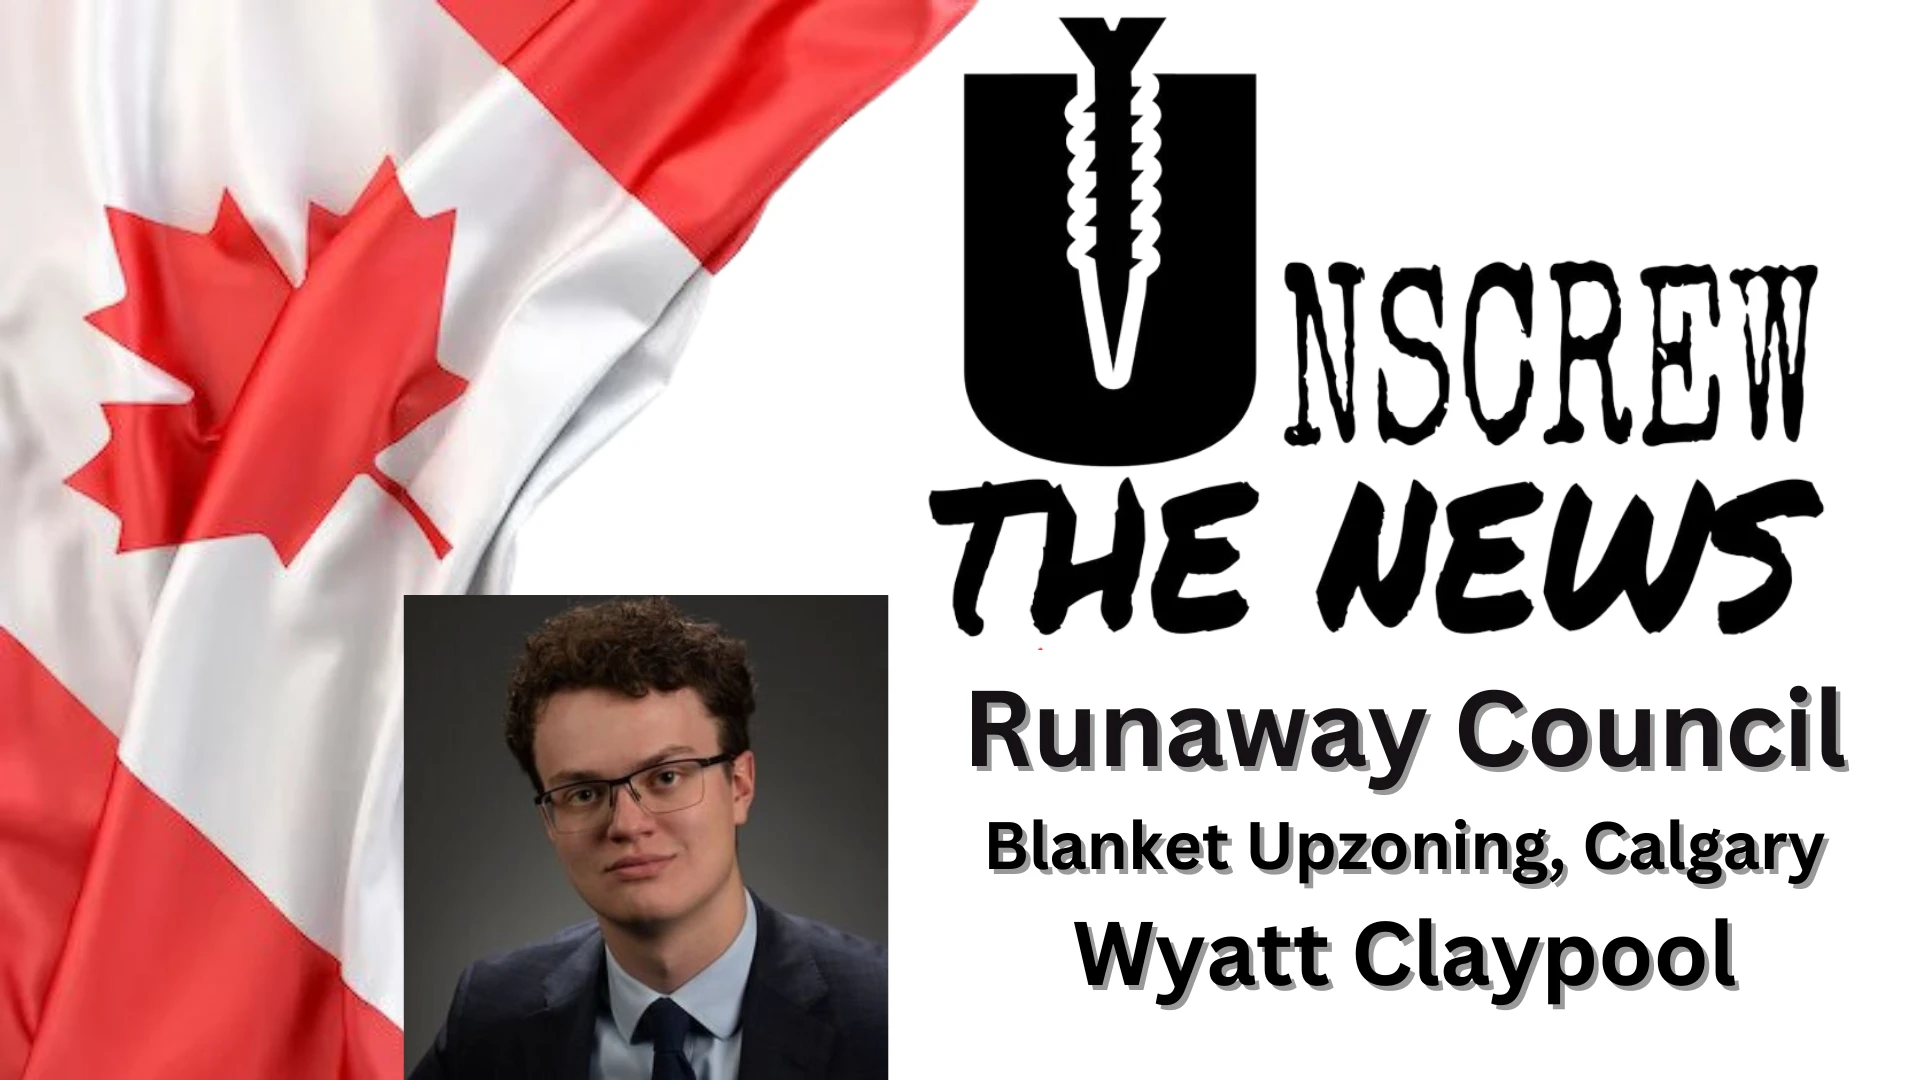 Runaway Council | Blanket Upzoning, Calgary. Wyatt Claypool